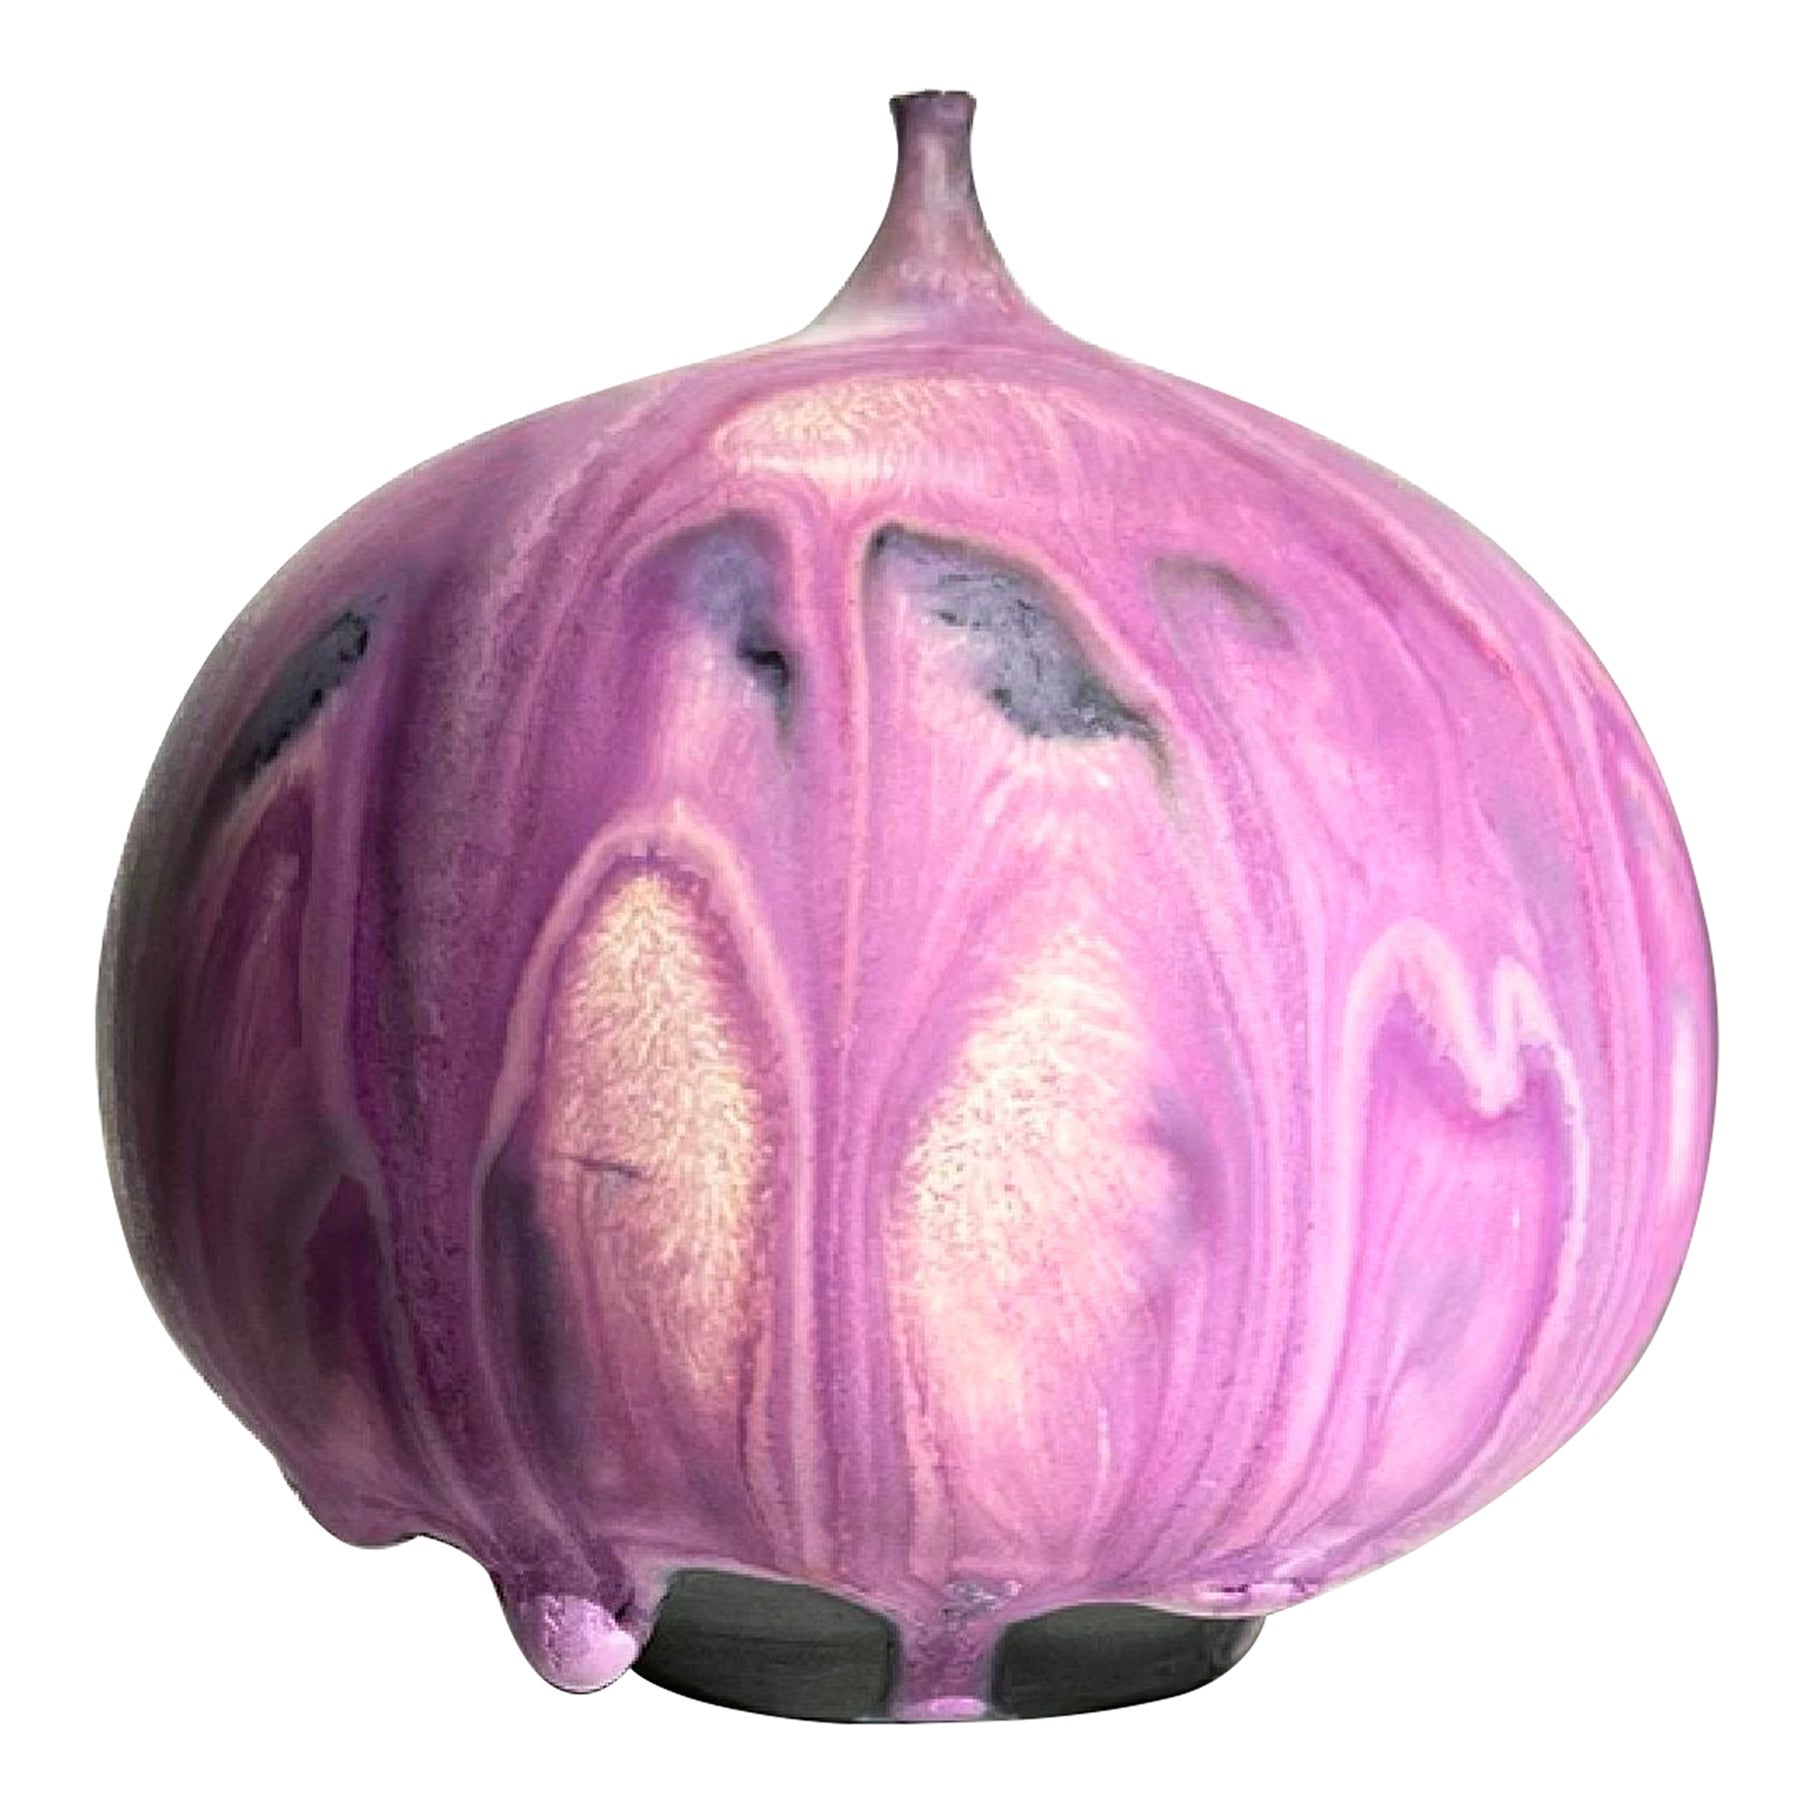 Rose and Erni Cabat Glazed Porcelain Feelie Vase, Pink, Cream Ceramic Sculpture